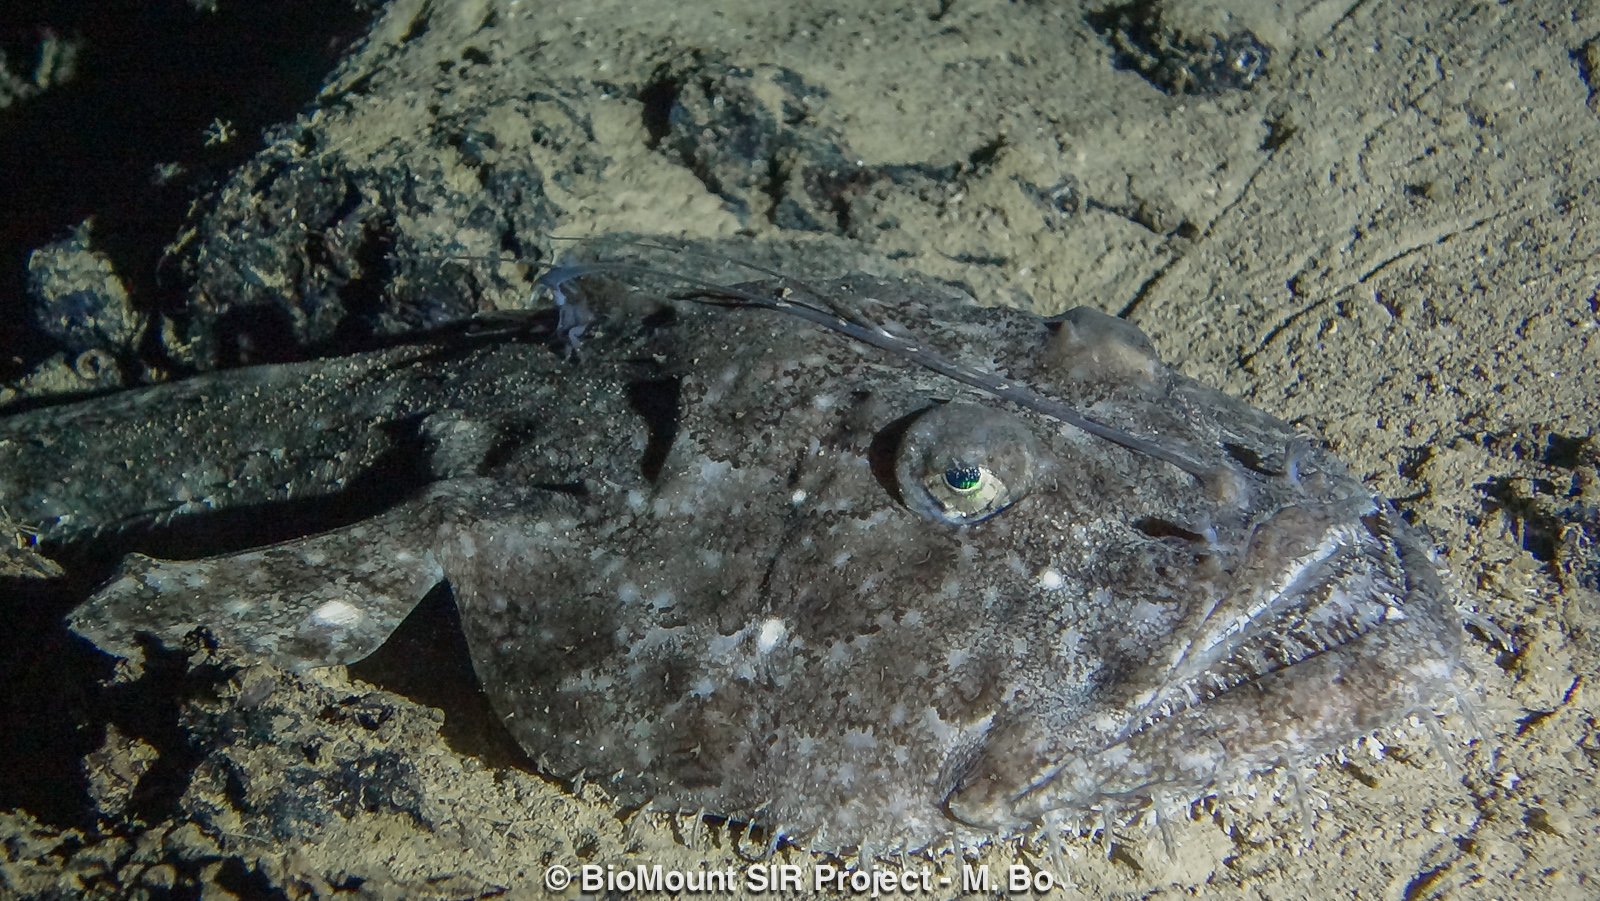 A large monkfish, Lophius sp.